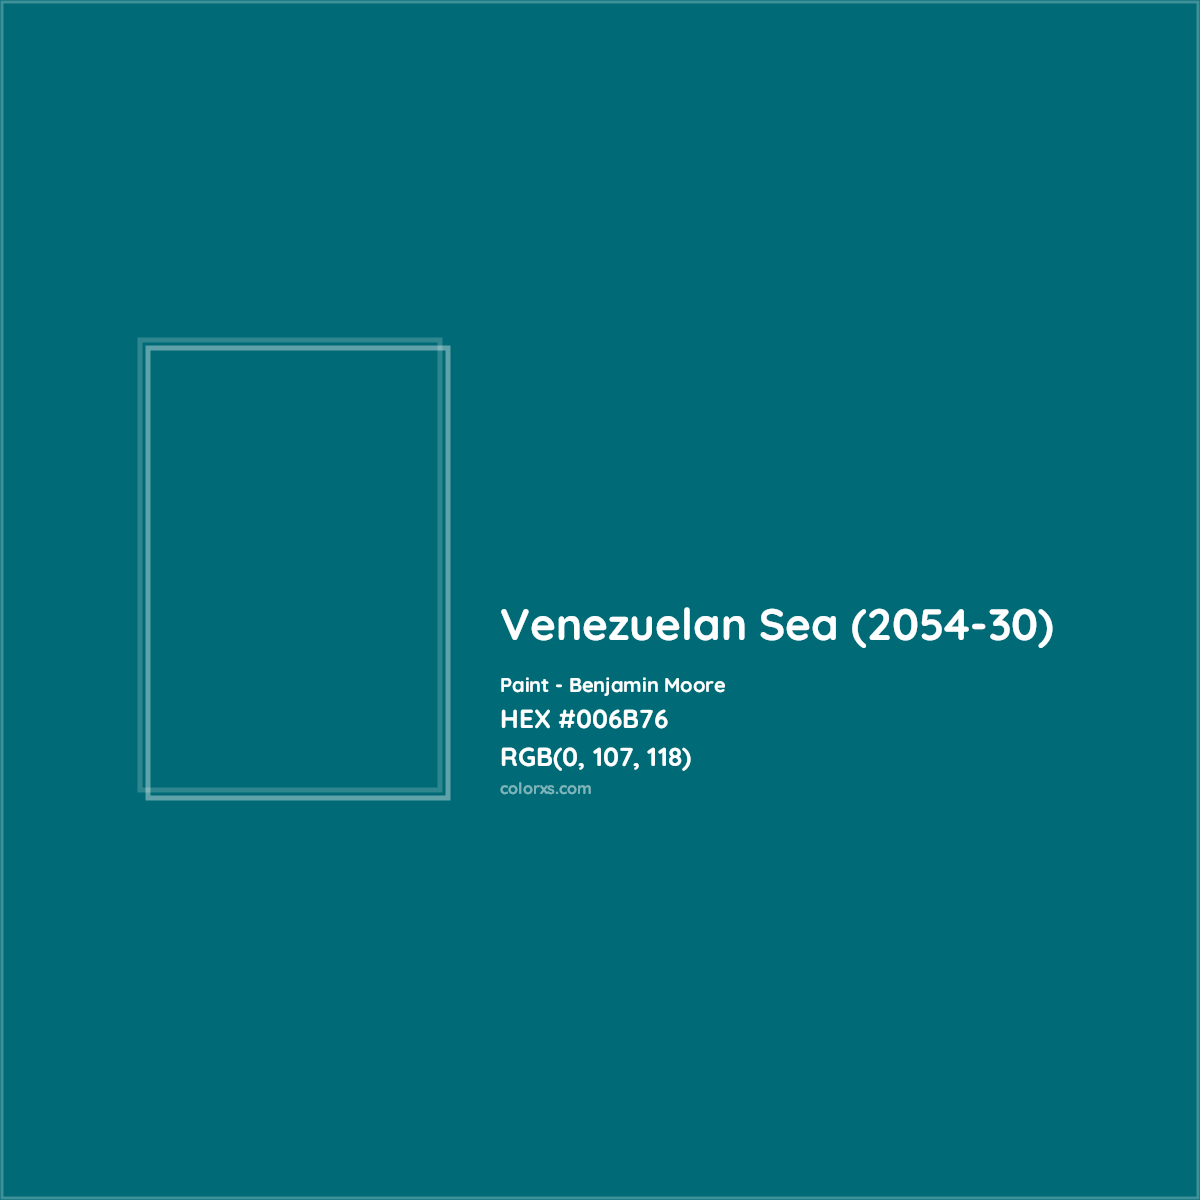 HEX #006B76 Venezuelan Sea (2054-30) Paint Benjamin Moore - Color Code